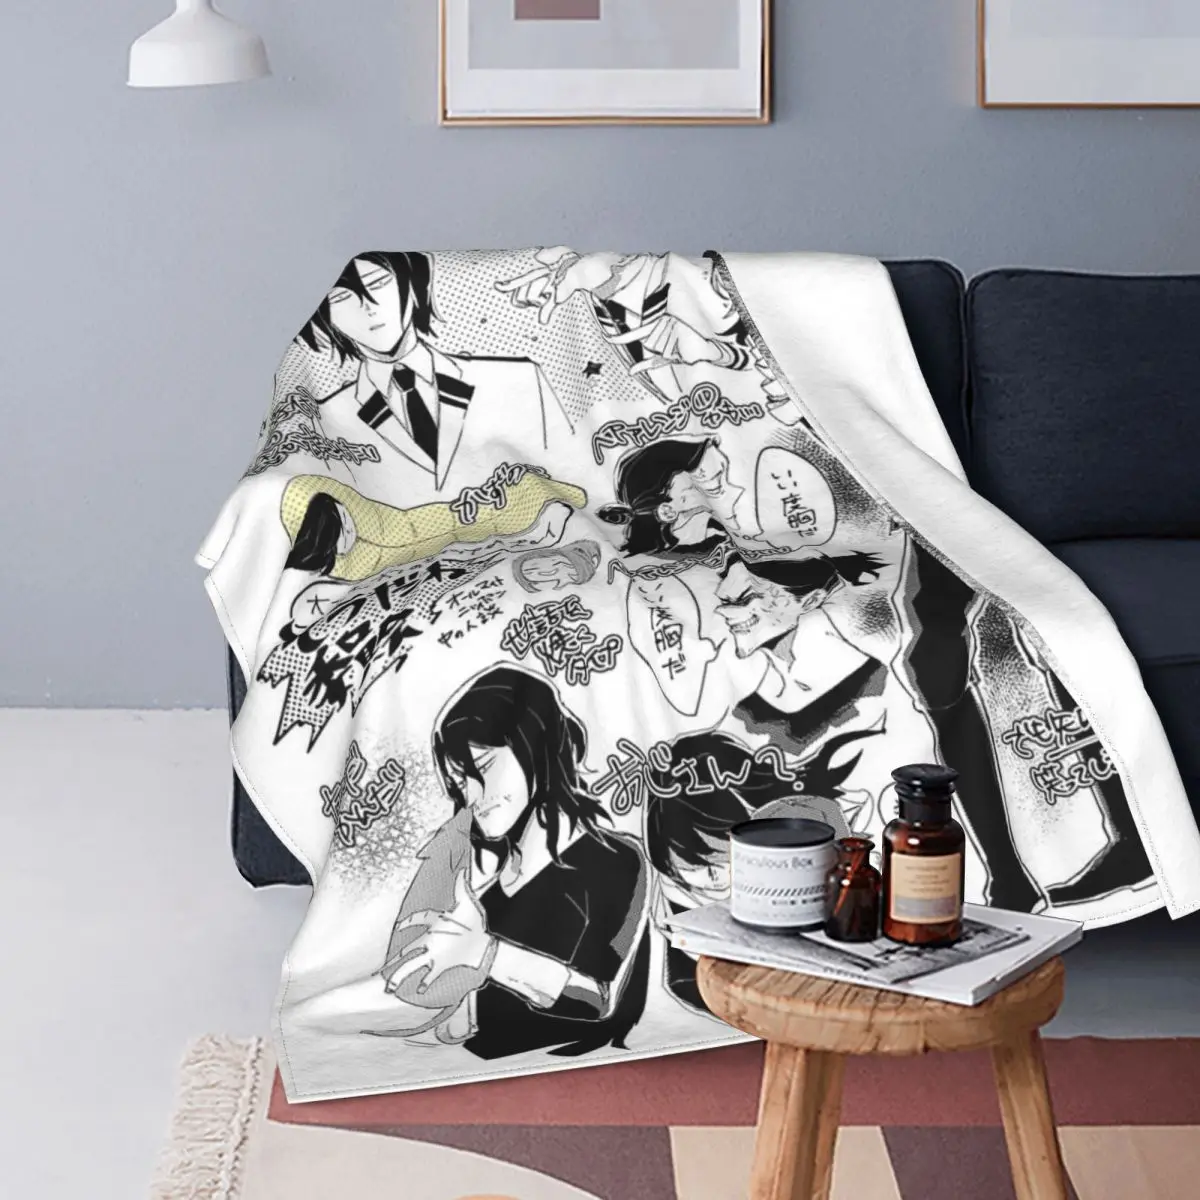 

My Hero Academia-Manta de Anime japonés, decoración de forro polar, manta suave transpirable de Japón para ropa de cama, colchas